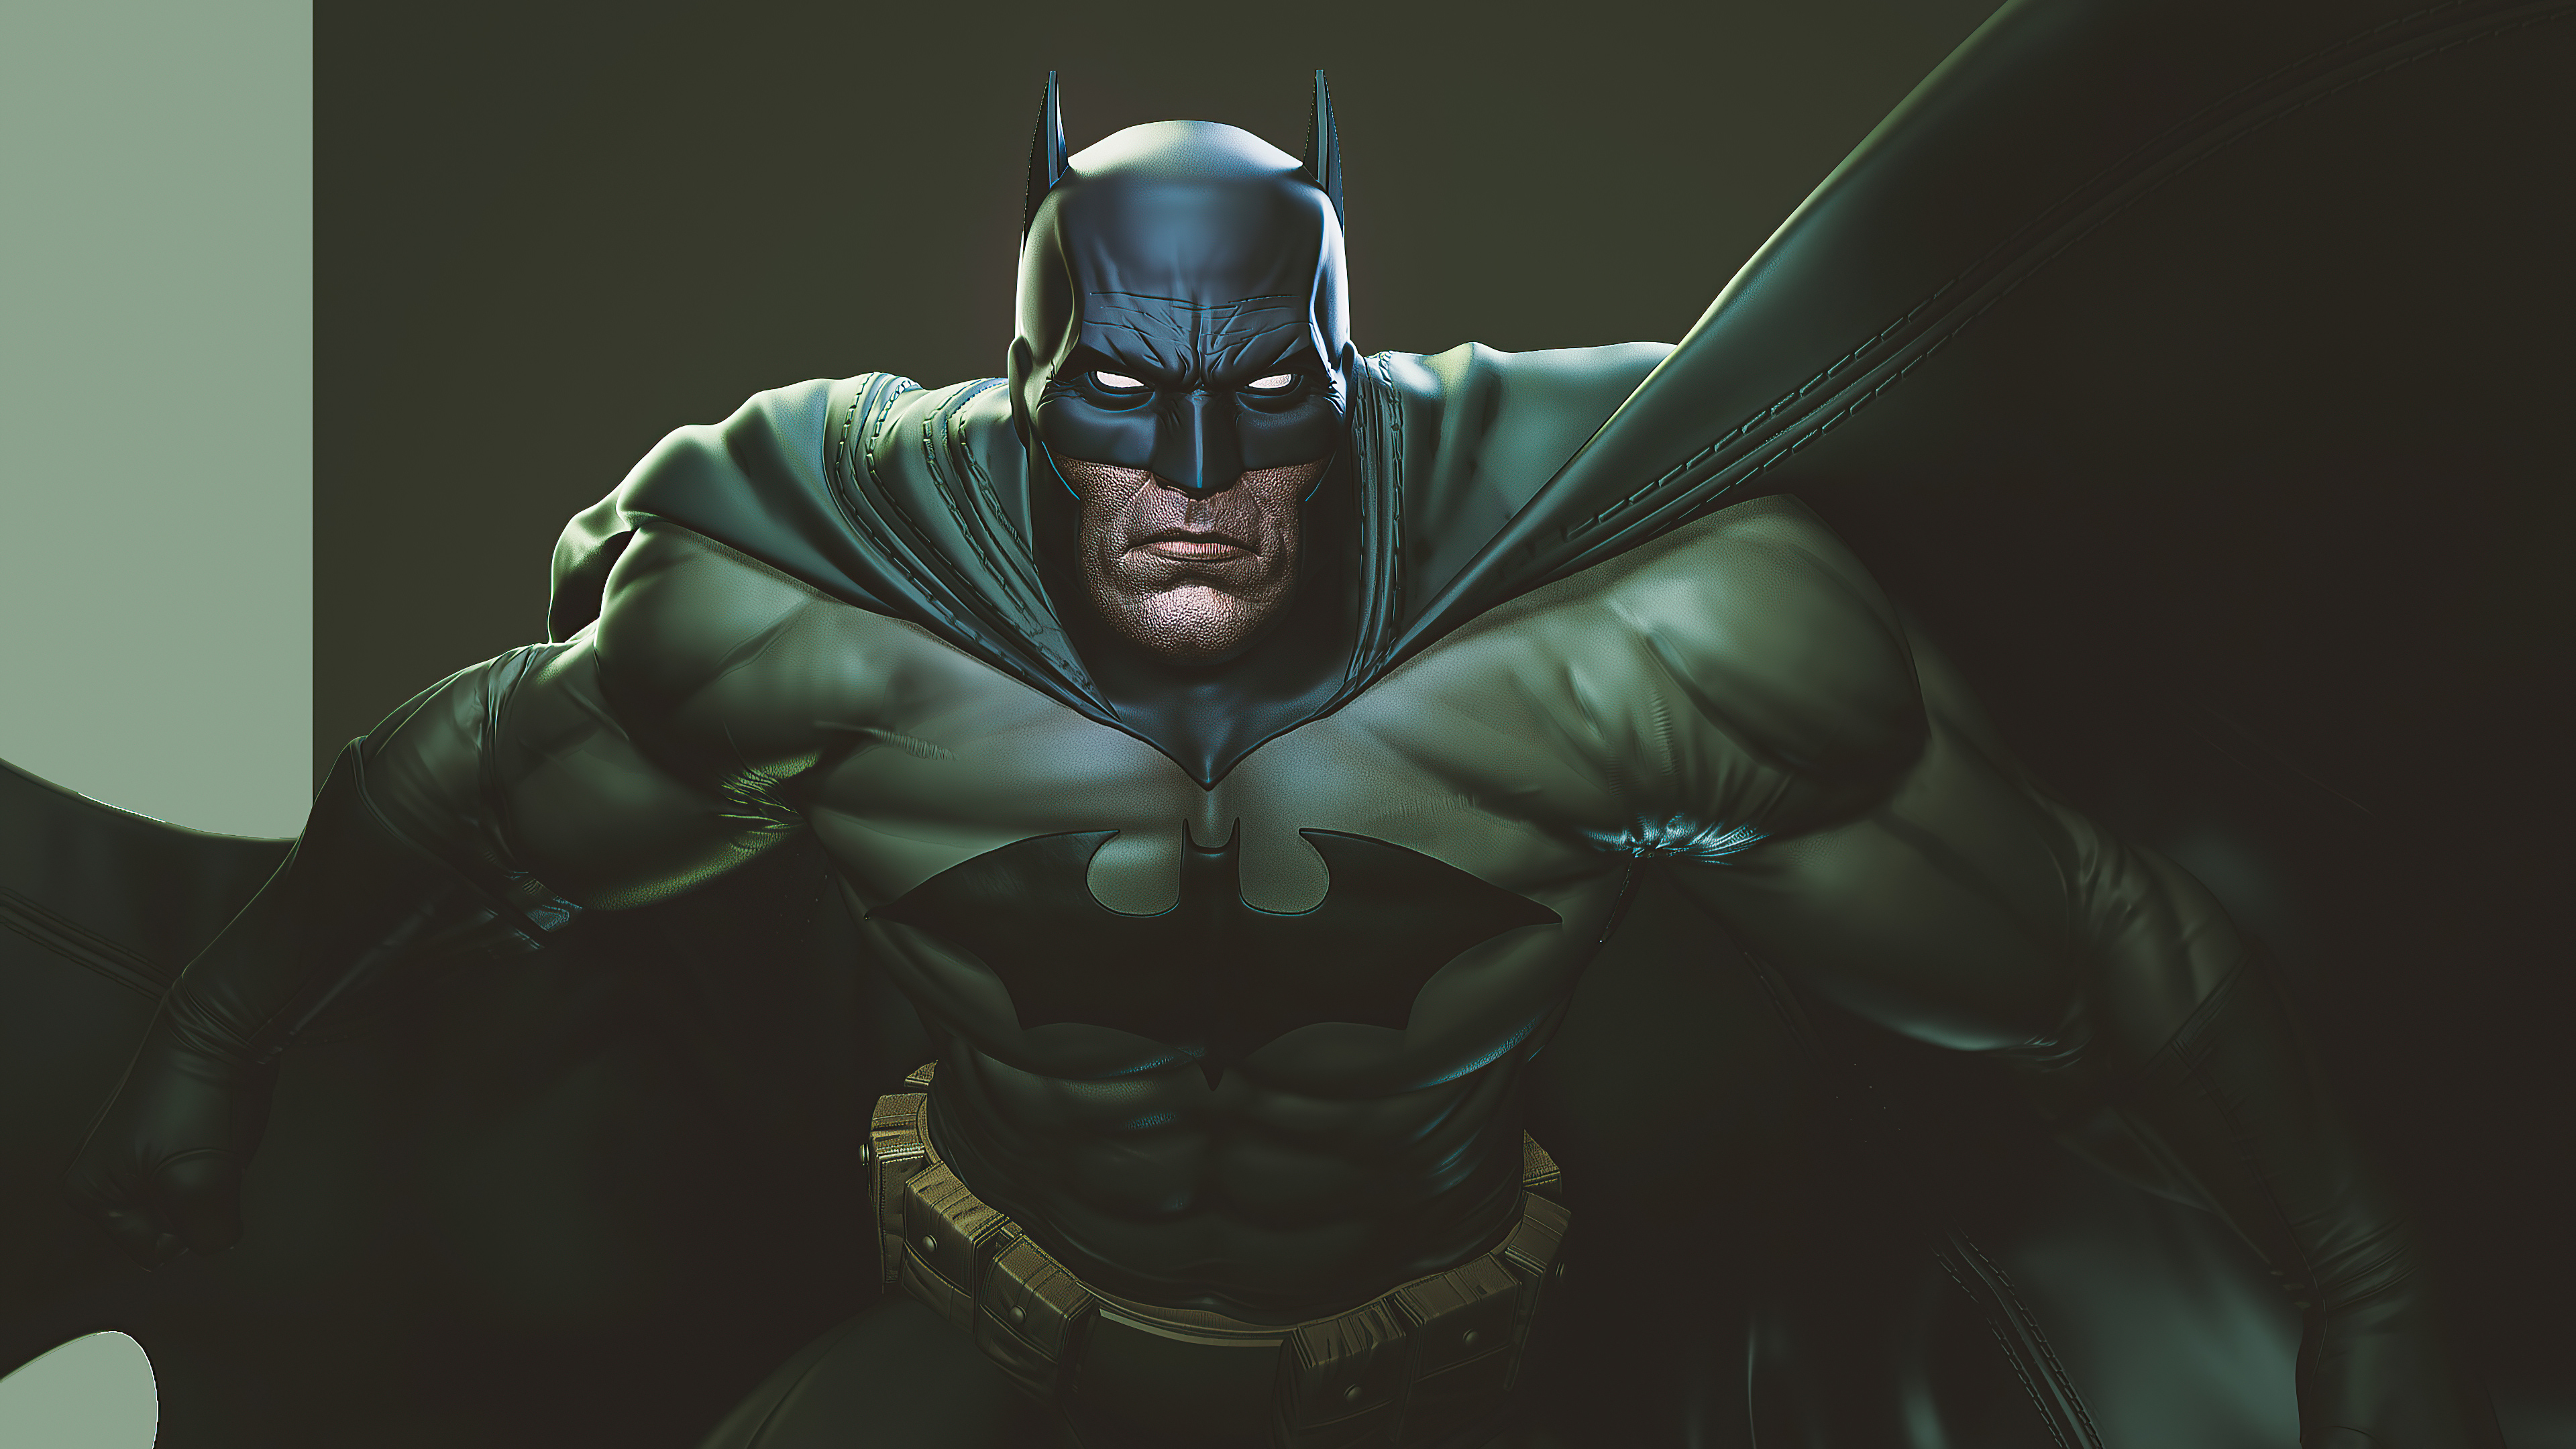 Green Batman DC Comic Wallpaper, HD Superheroes 4K Wallpapers, Images